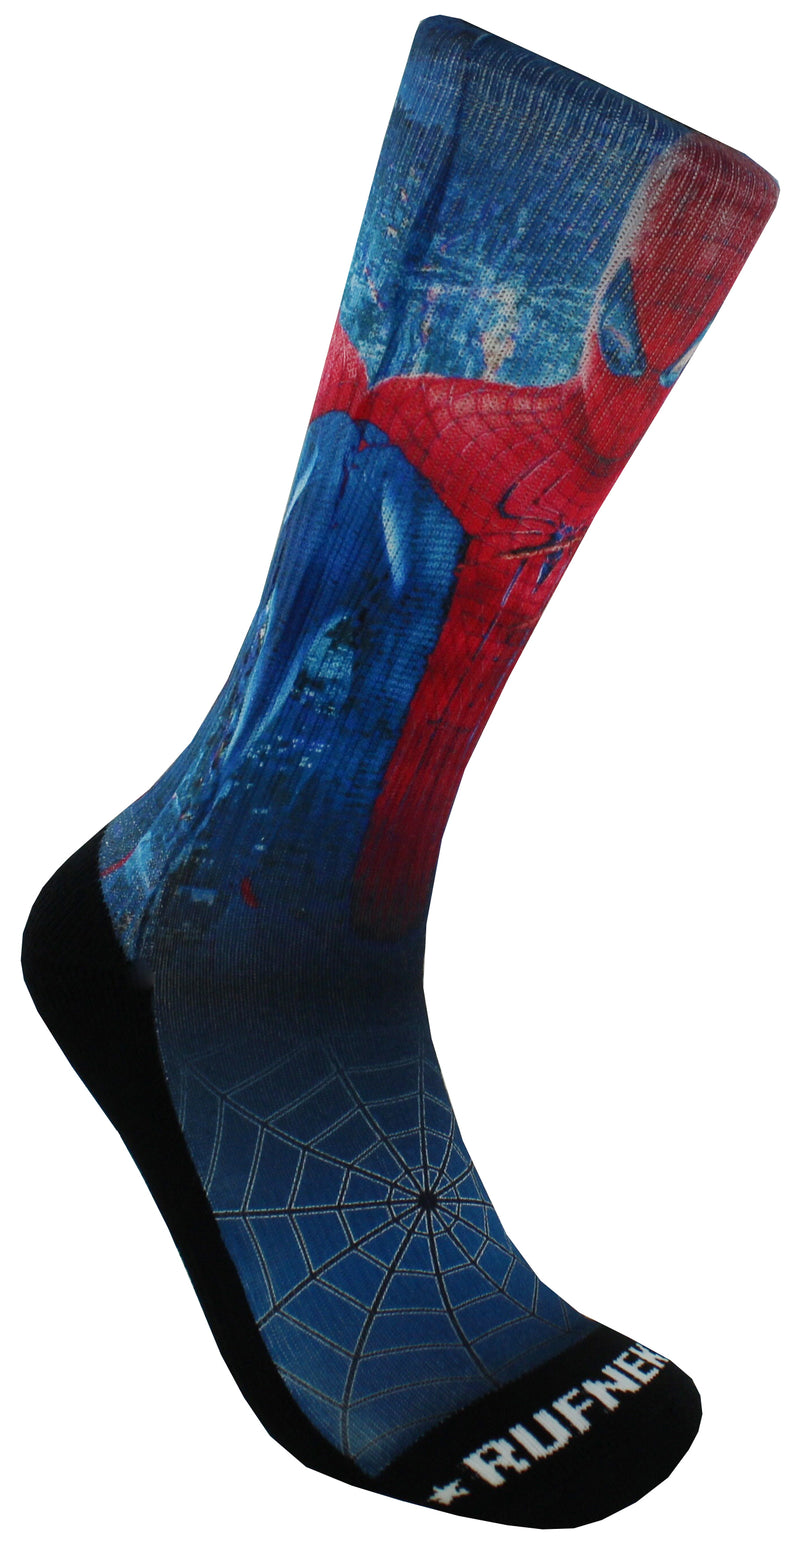 Rufnek Spiderman Battle Spidey Men's Socks